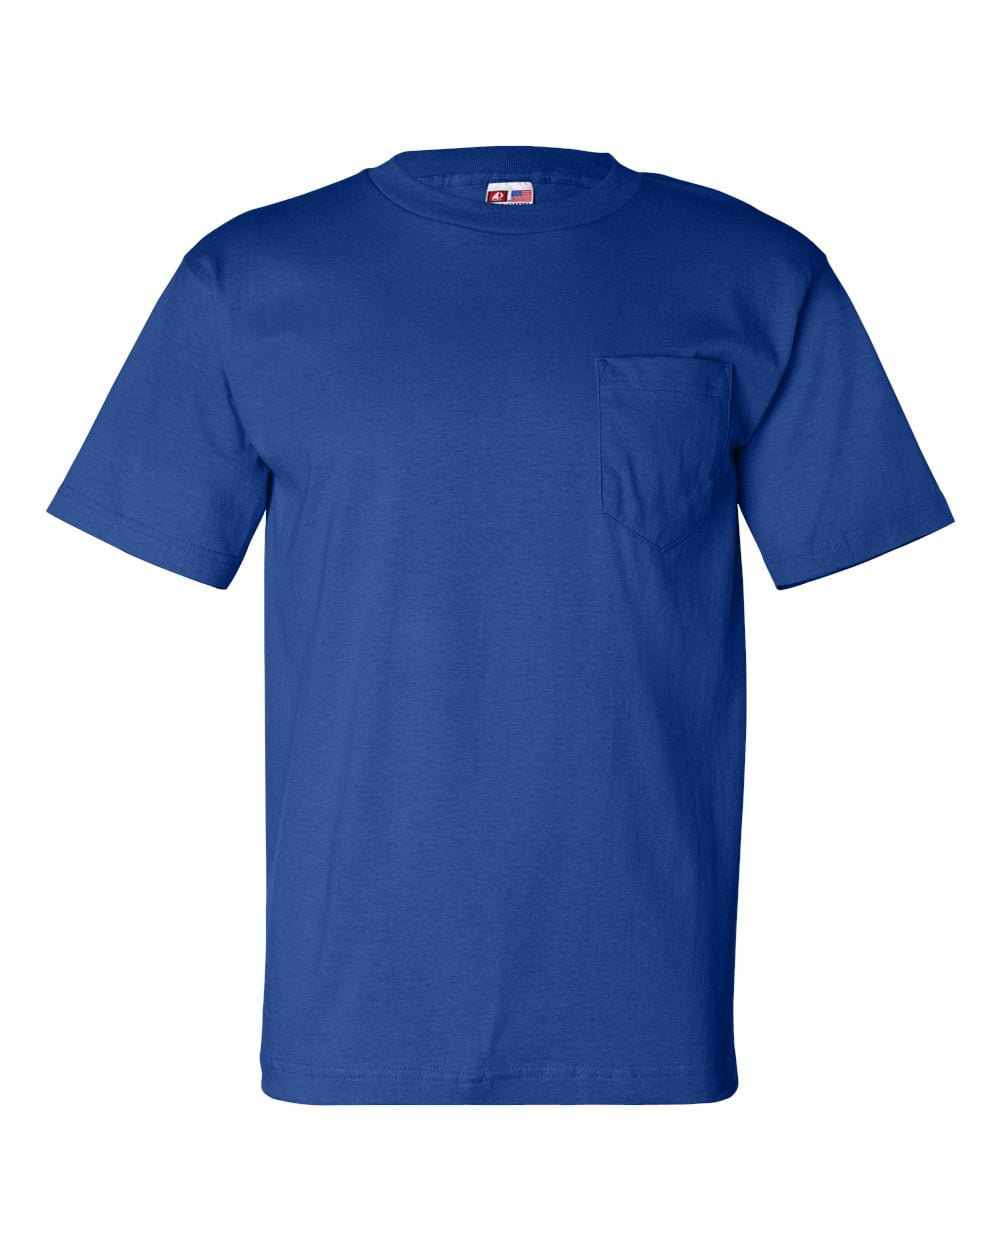 Bayside - USA-Made Short Sleeve T-Shirt with a Pocket - 7100 - Walmart.com